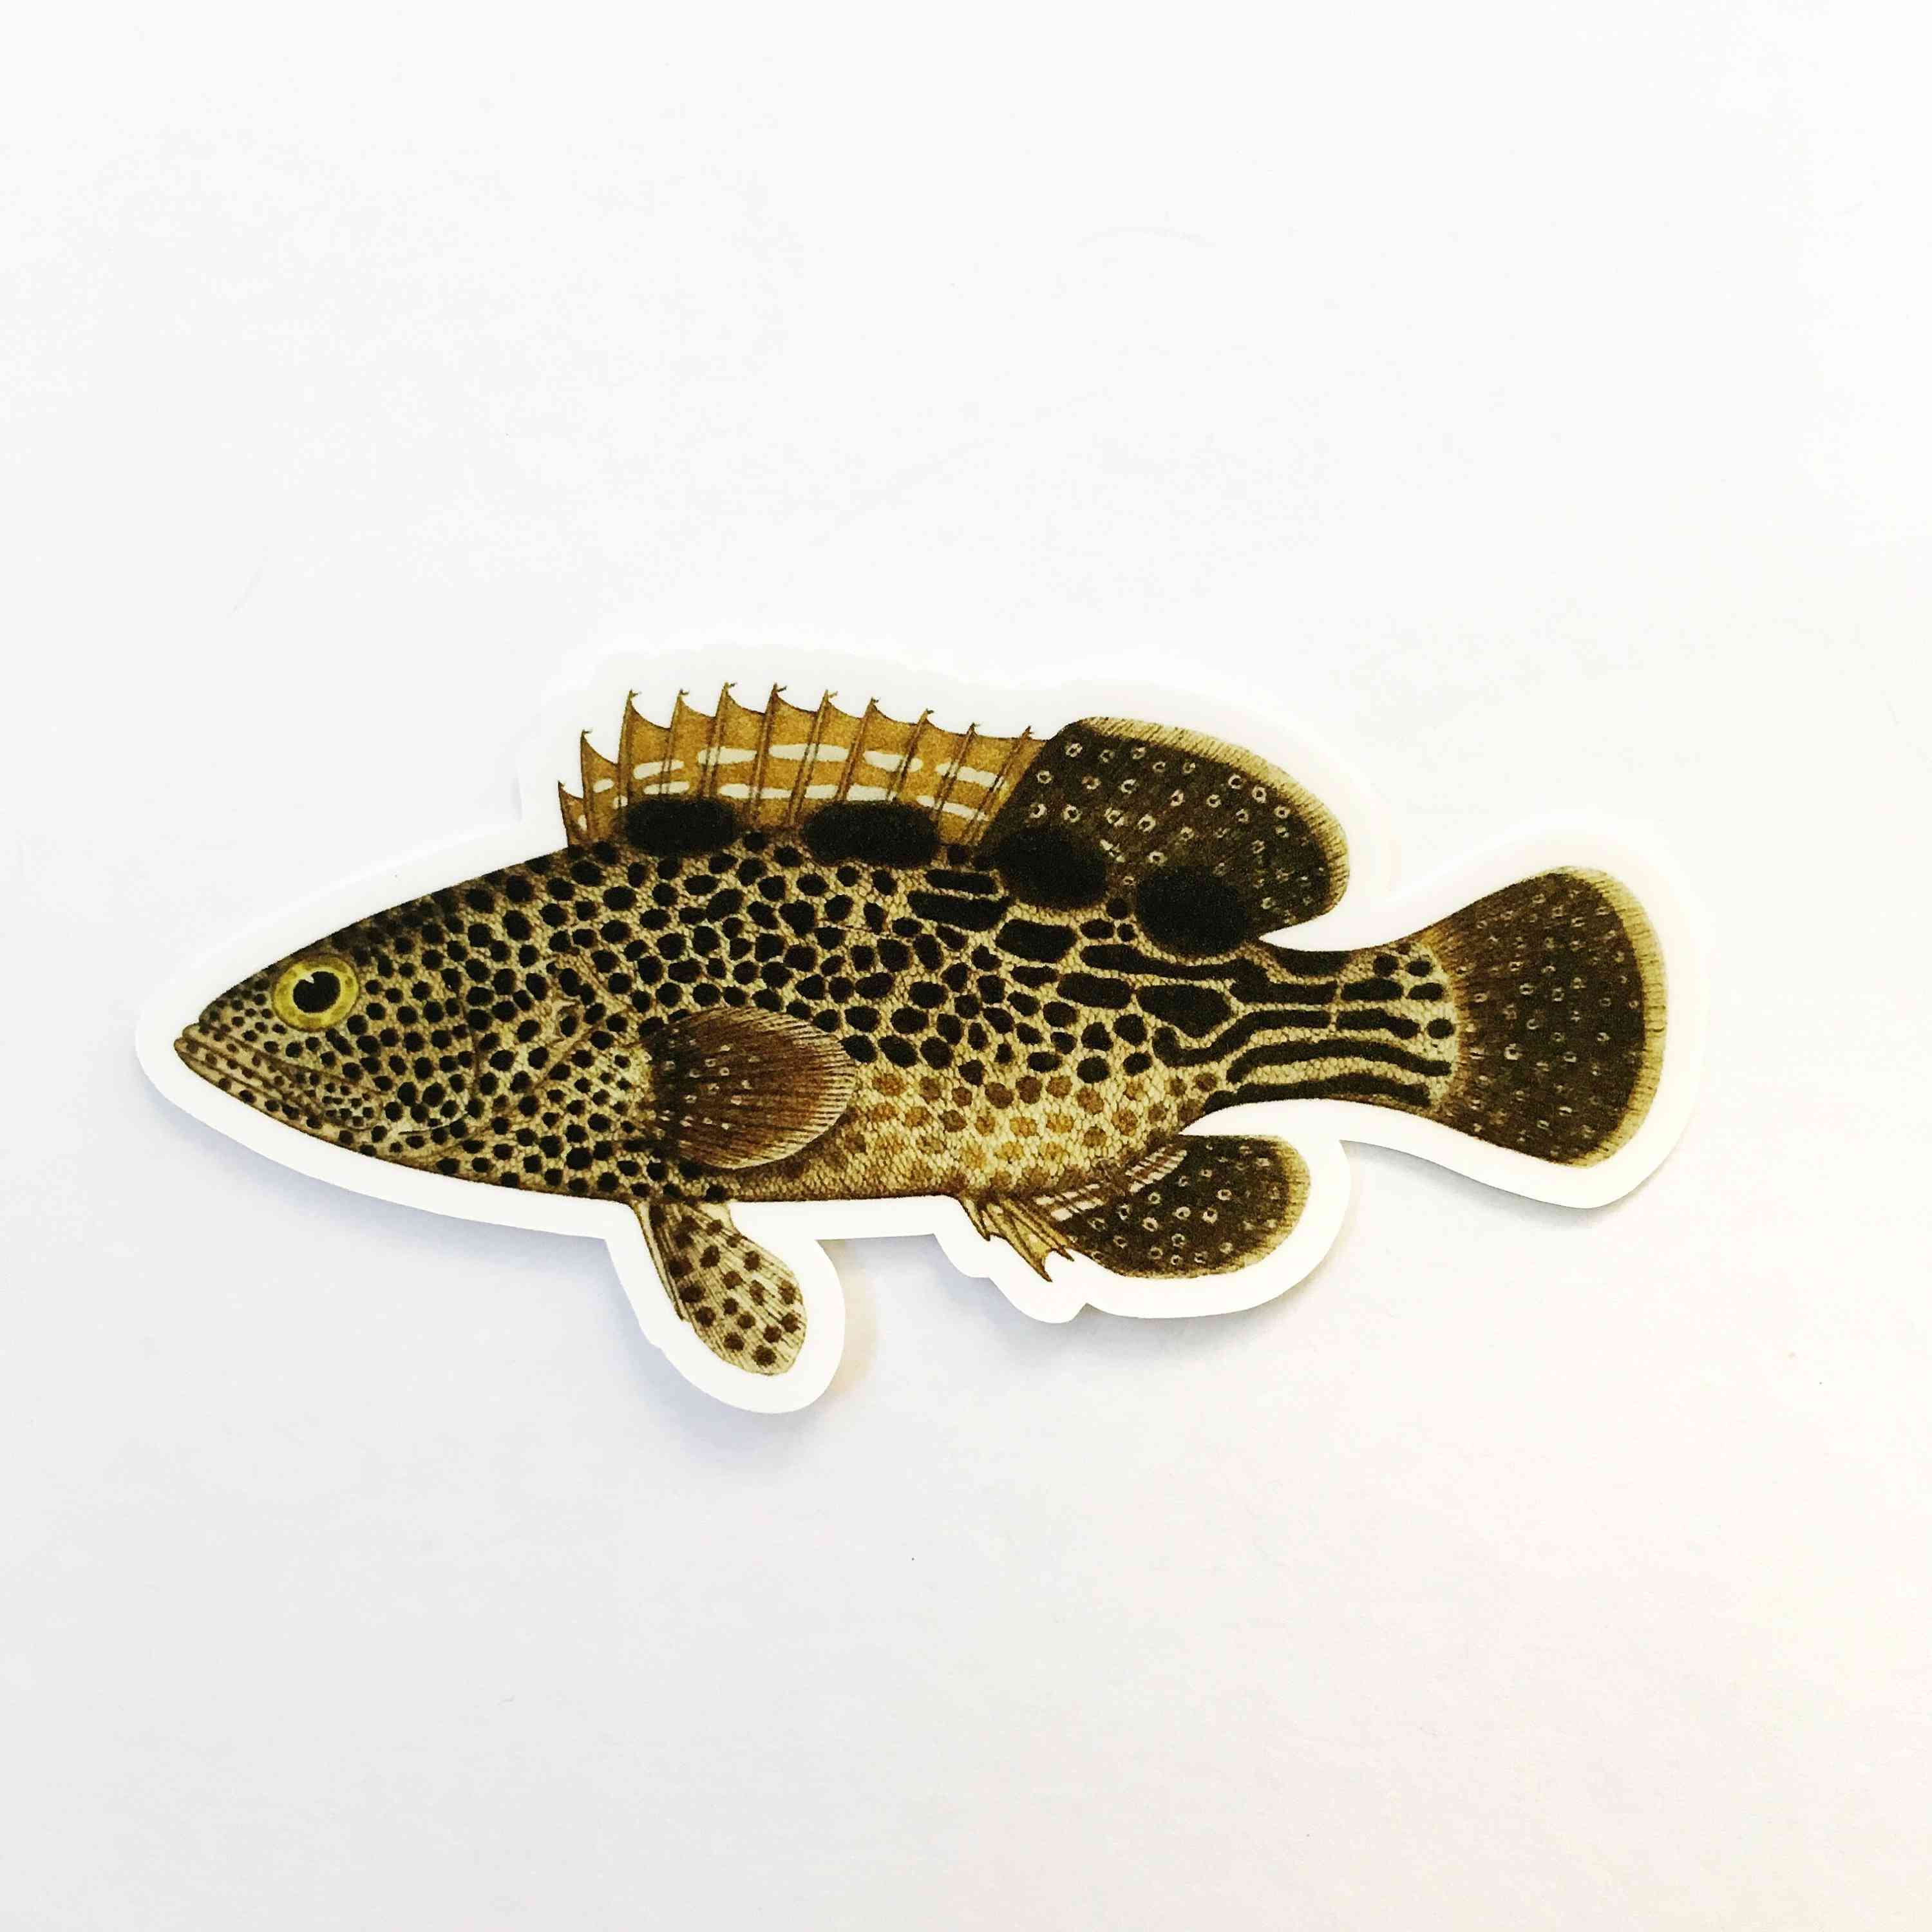 Grouper fisk vinyl klistermärke